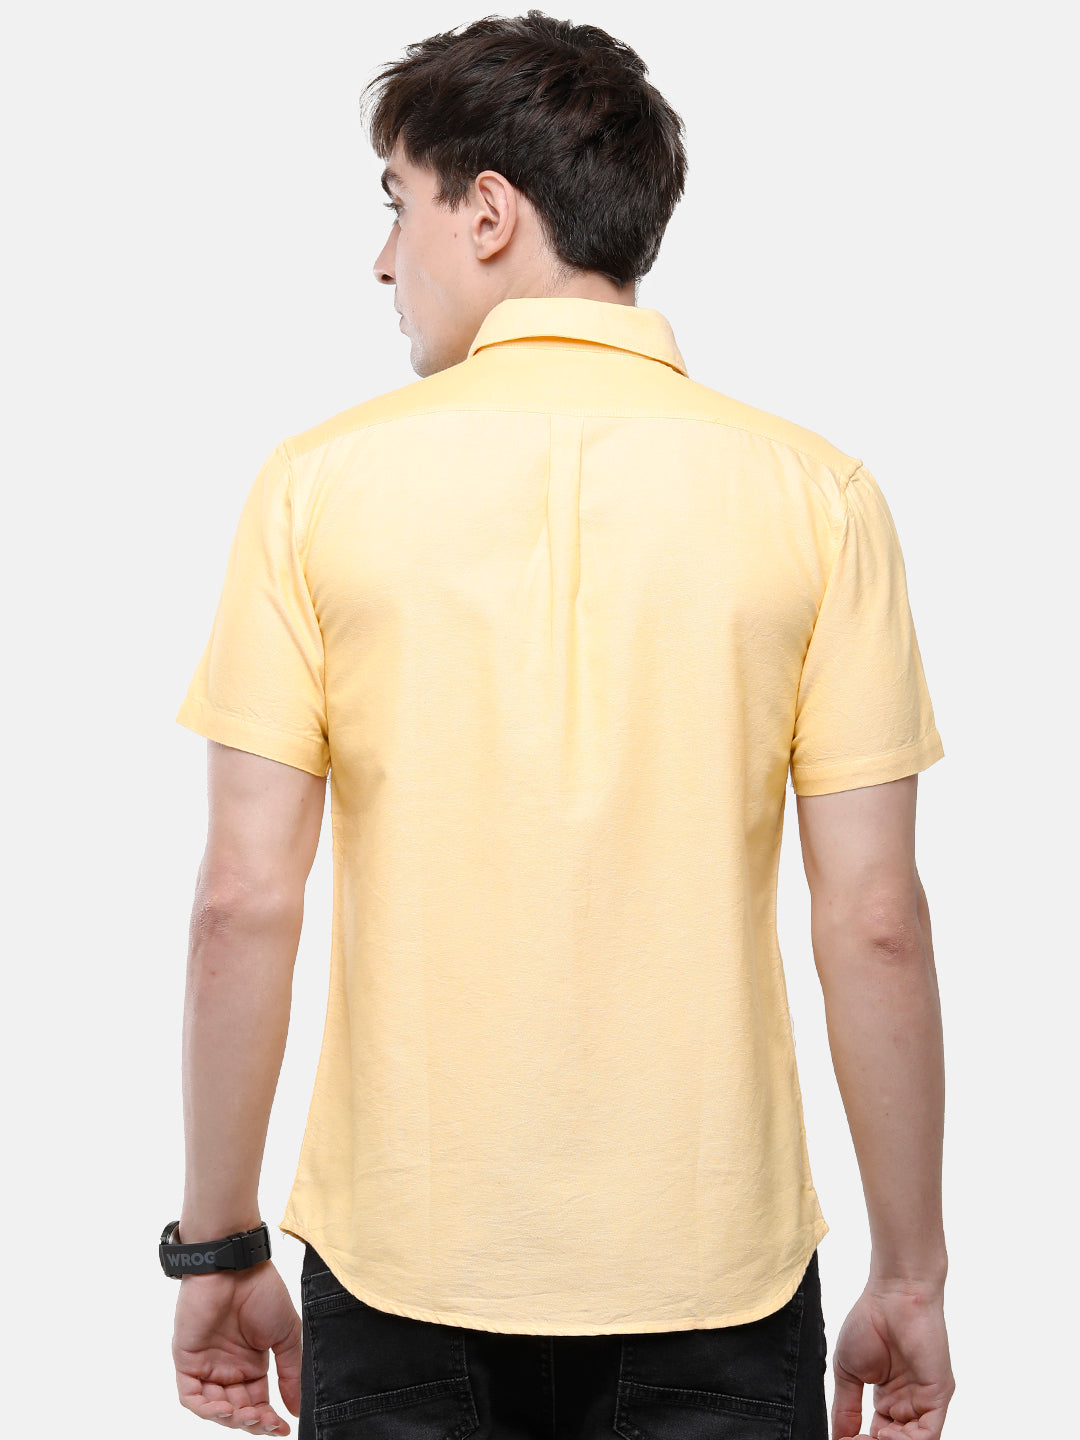 Classic Polo Men's Cotton Yellow Solid Half Sleeve Shirt - Enzo-Yellow-Mf-Hs